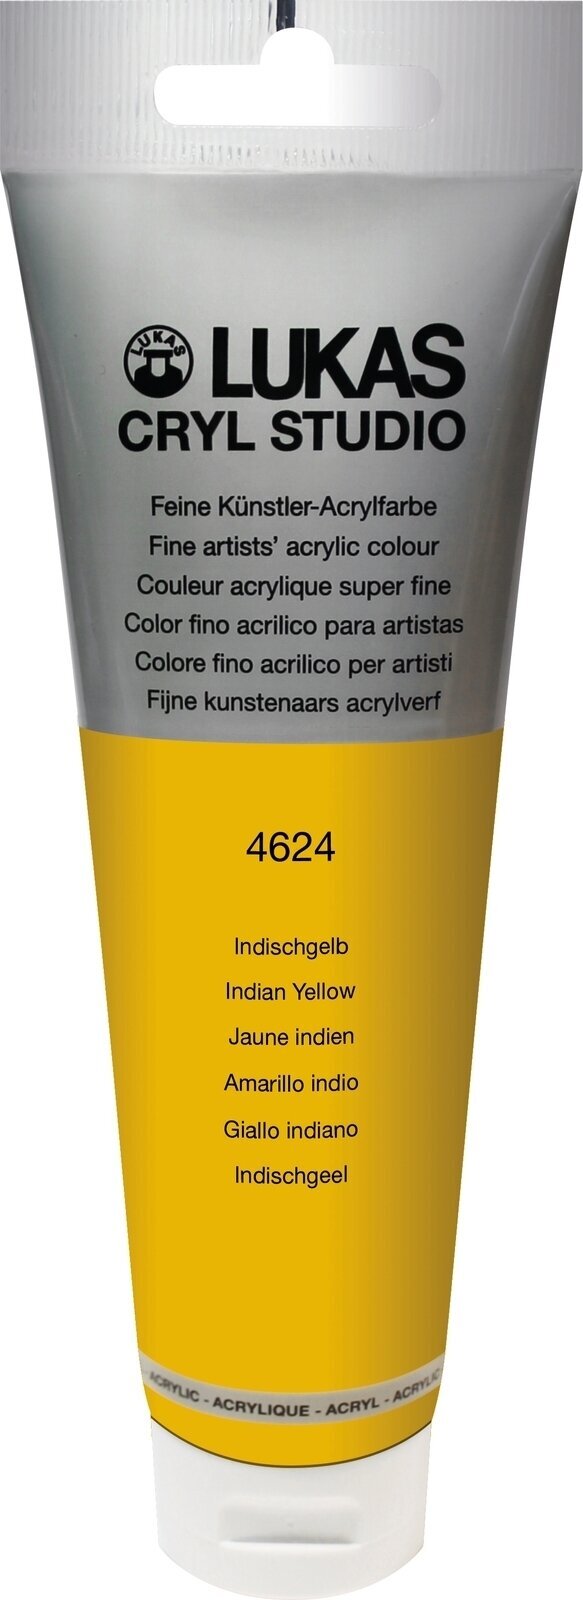 Acrylic Paint Lukas Cryl Studio Acrylic Paint Plastic Tube Acrylic Paint Indian Yellow 125 ml 1 pc